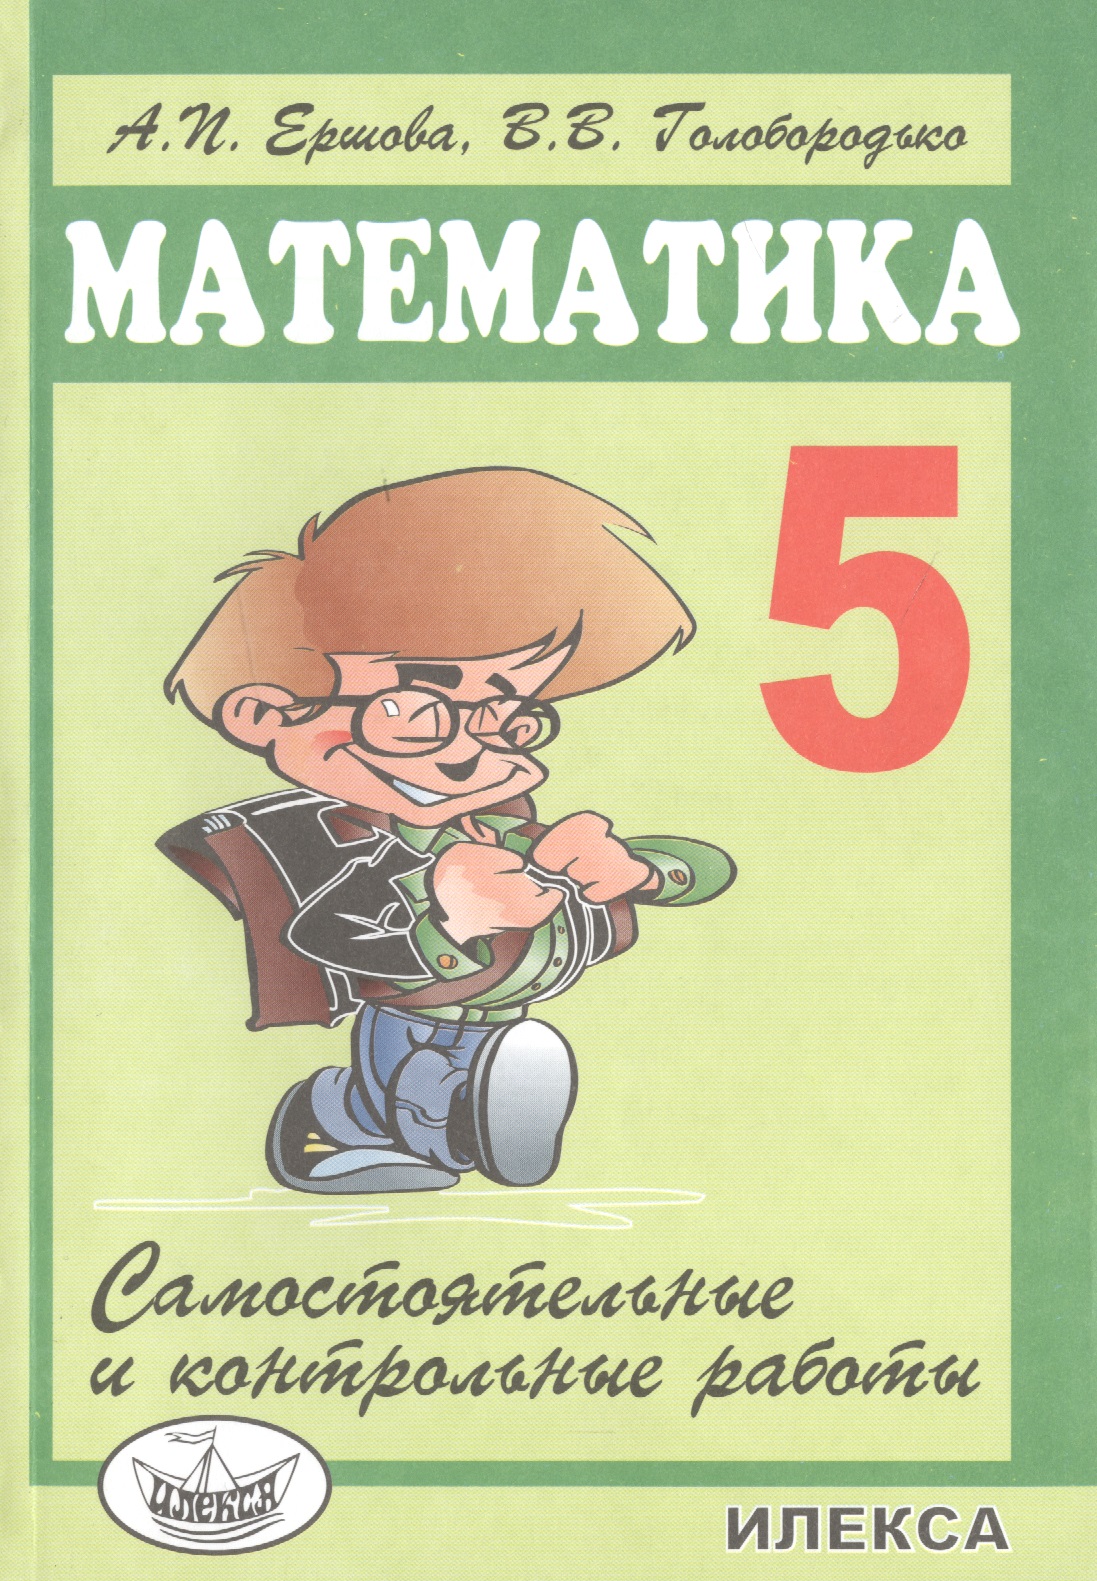 Математика 5 сборник решений